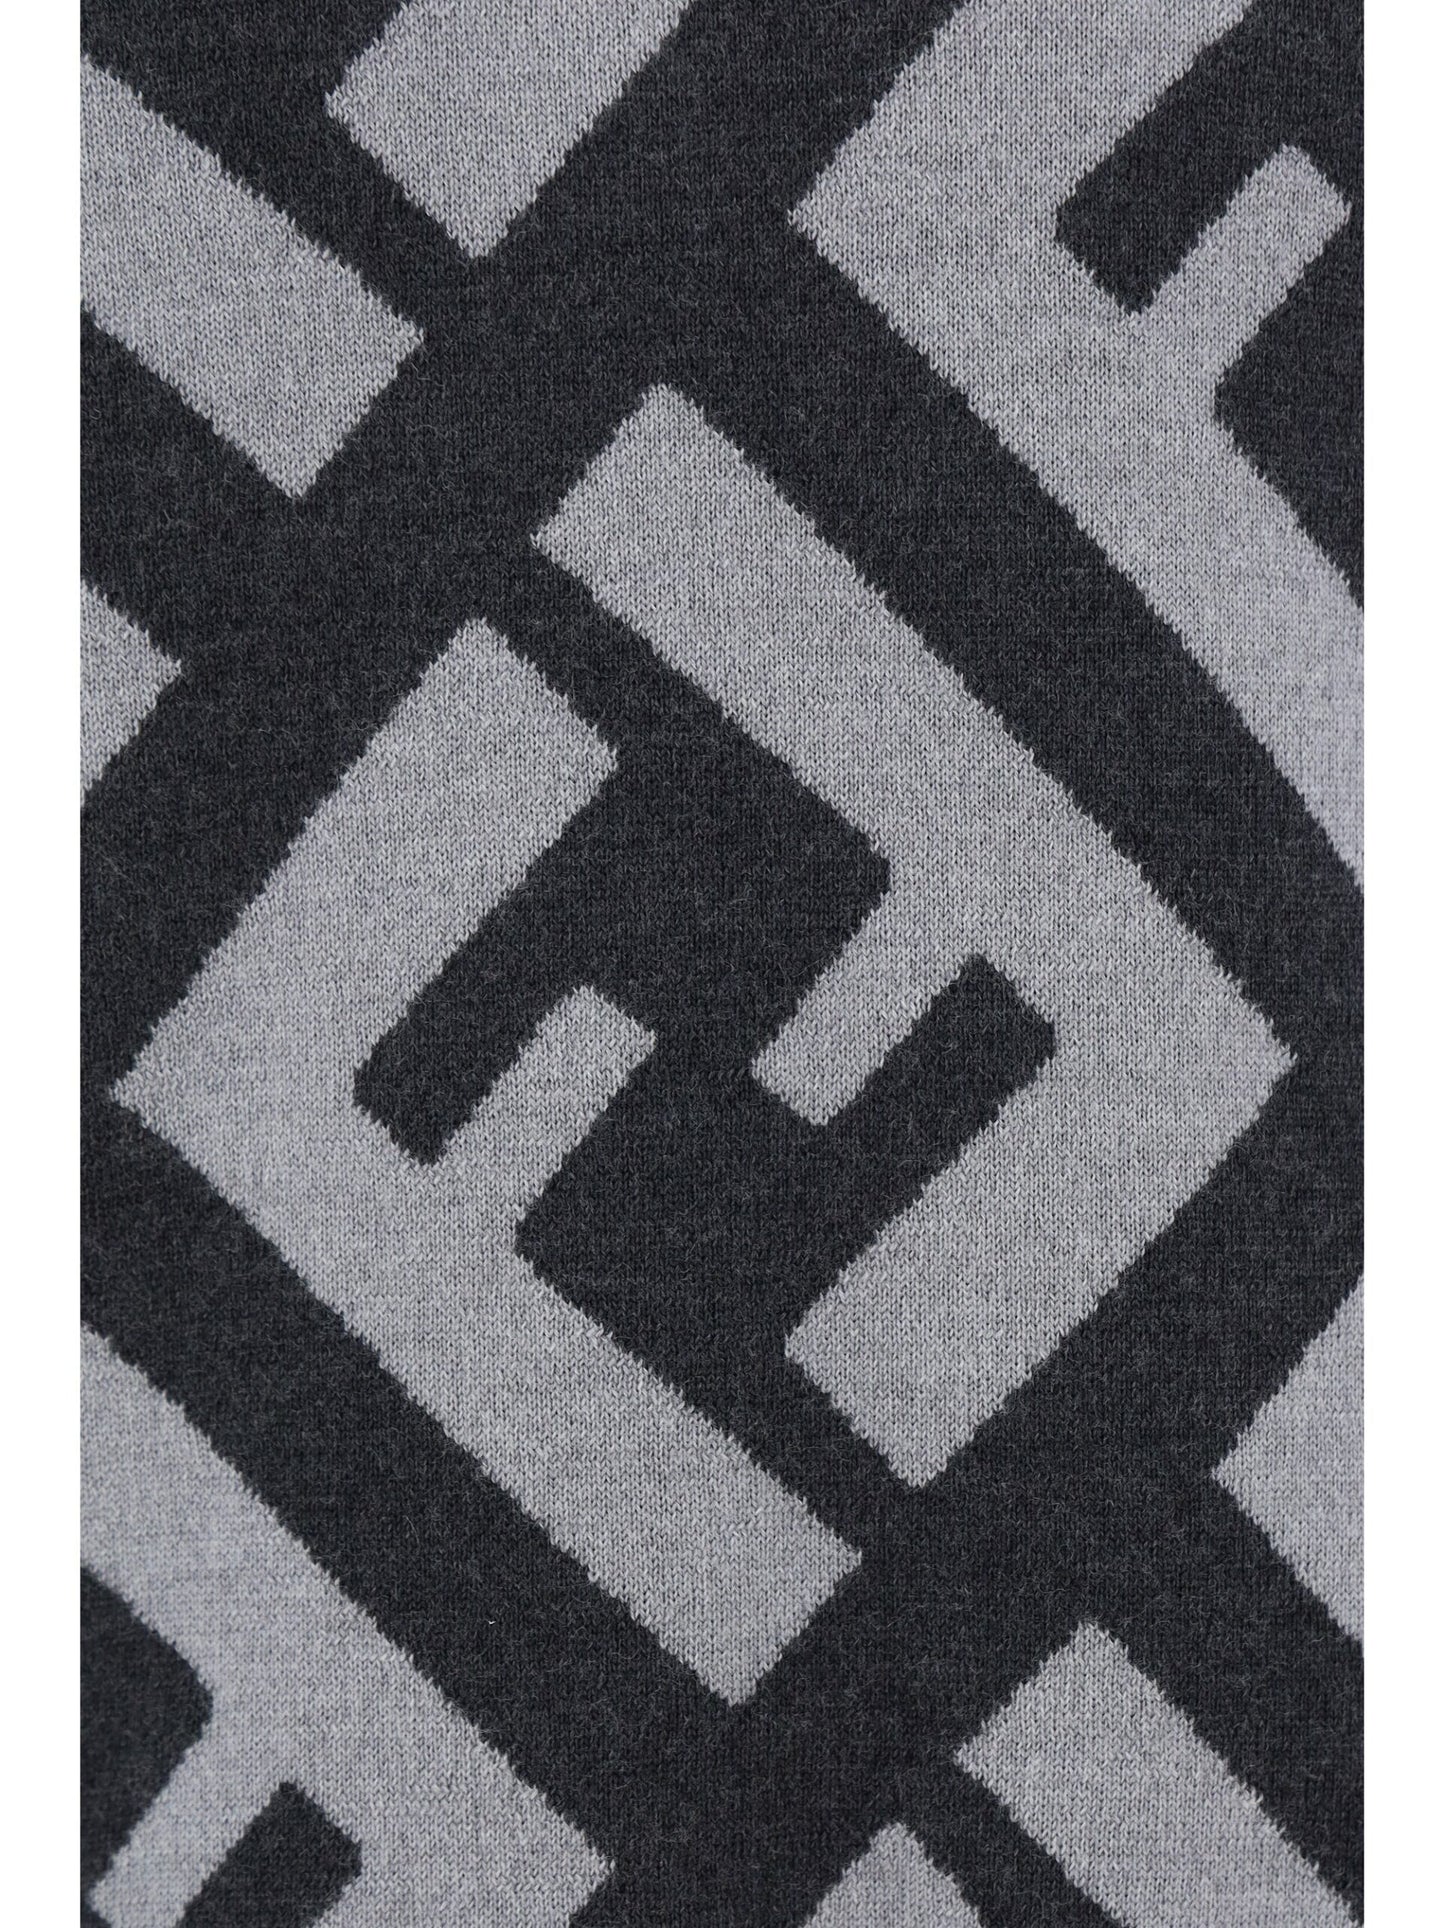 Chic Grey Wool Iconic Logo Sweater